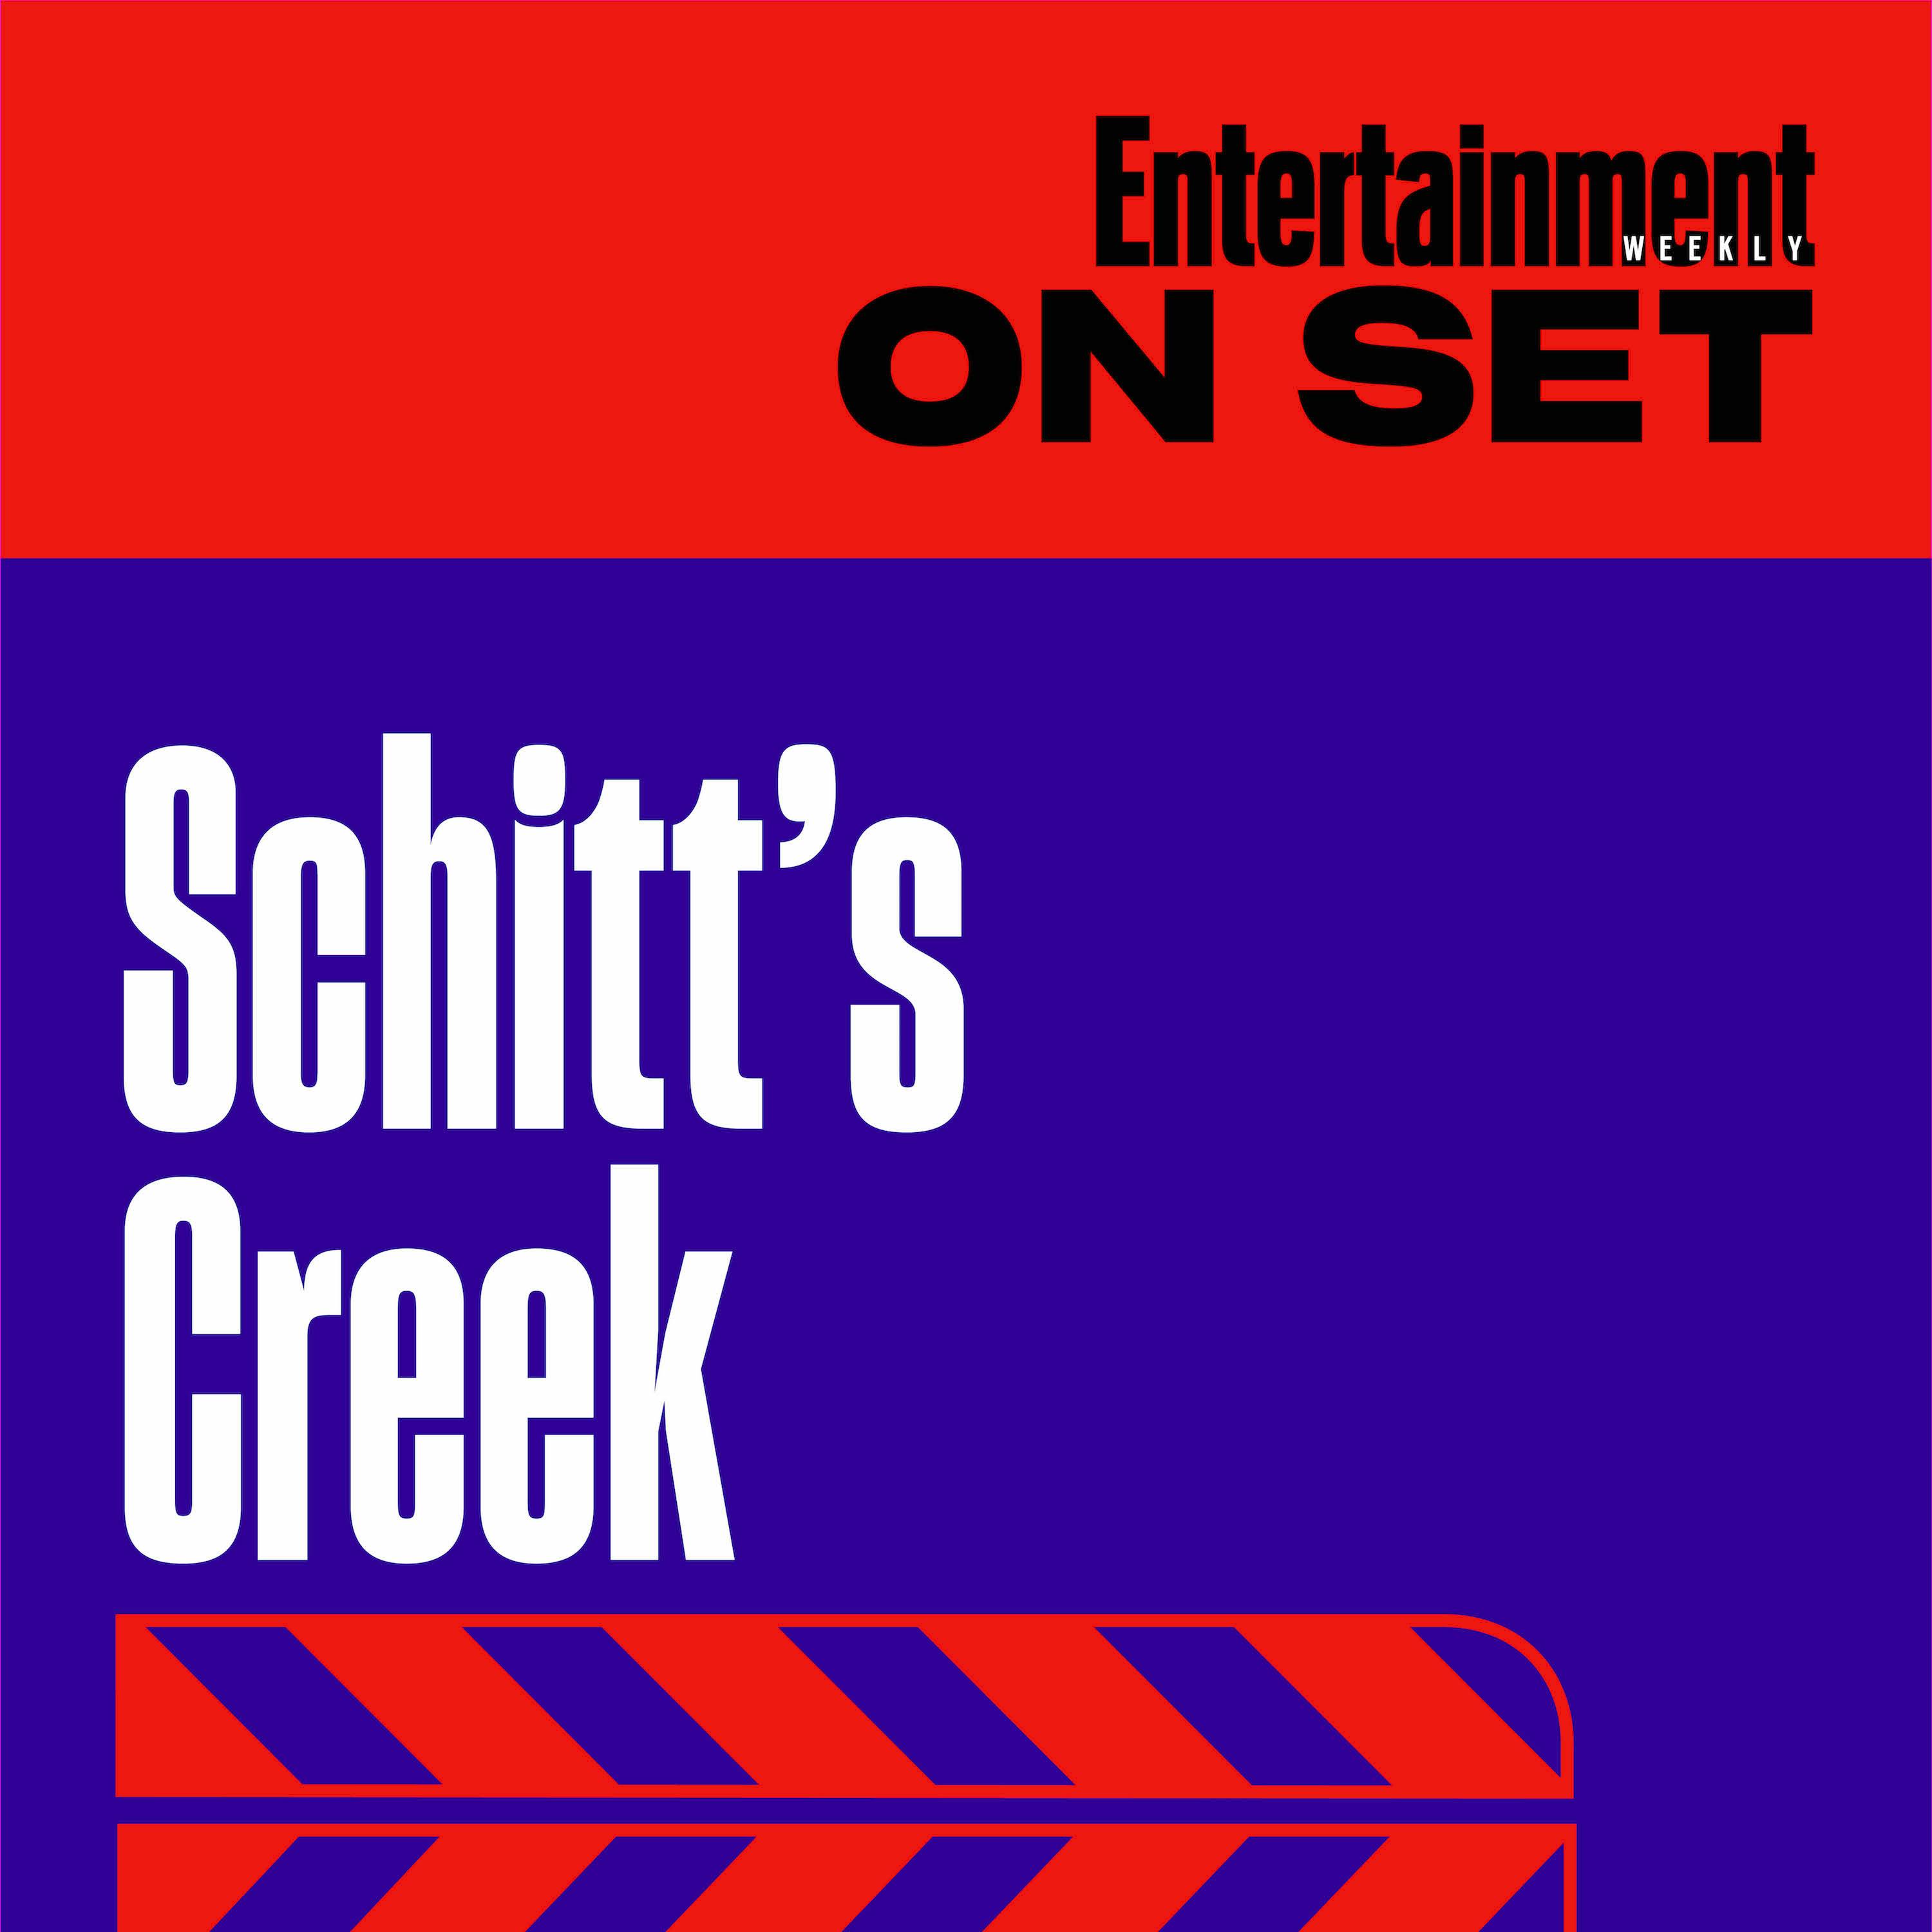 EW On Set: Schitt's Creek Episode 6.01 "Smoke Signals"